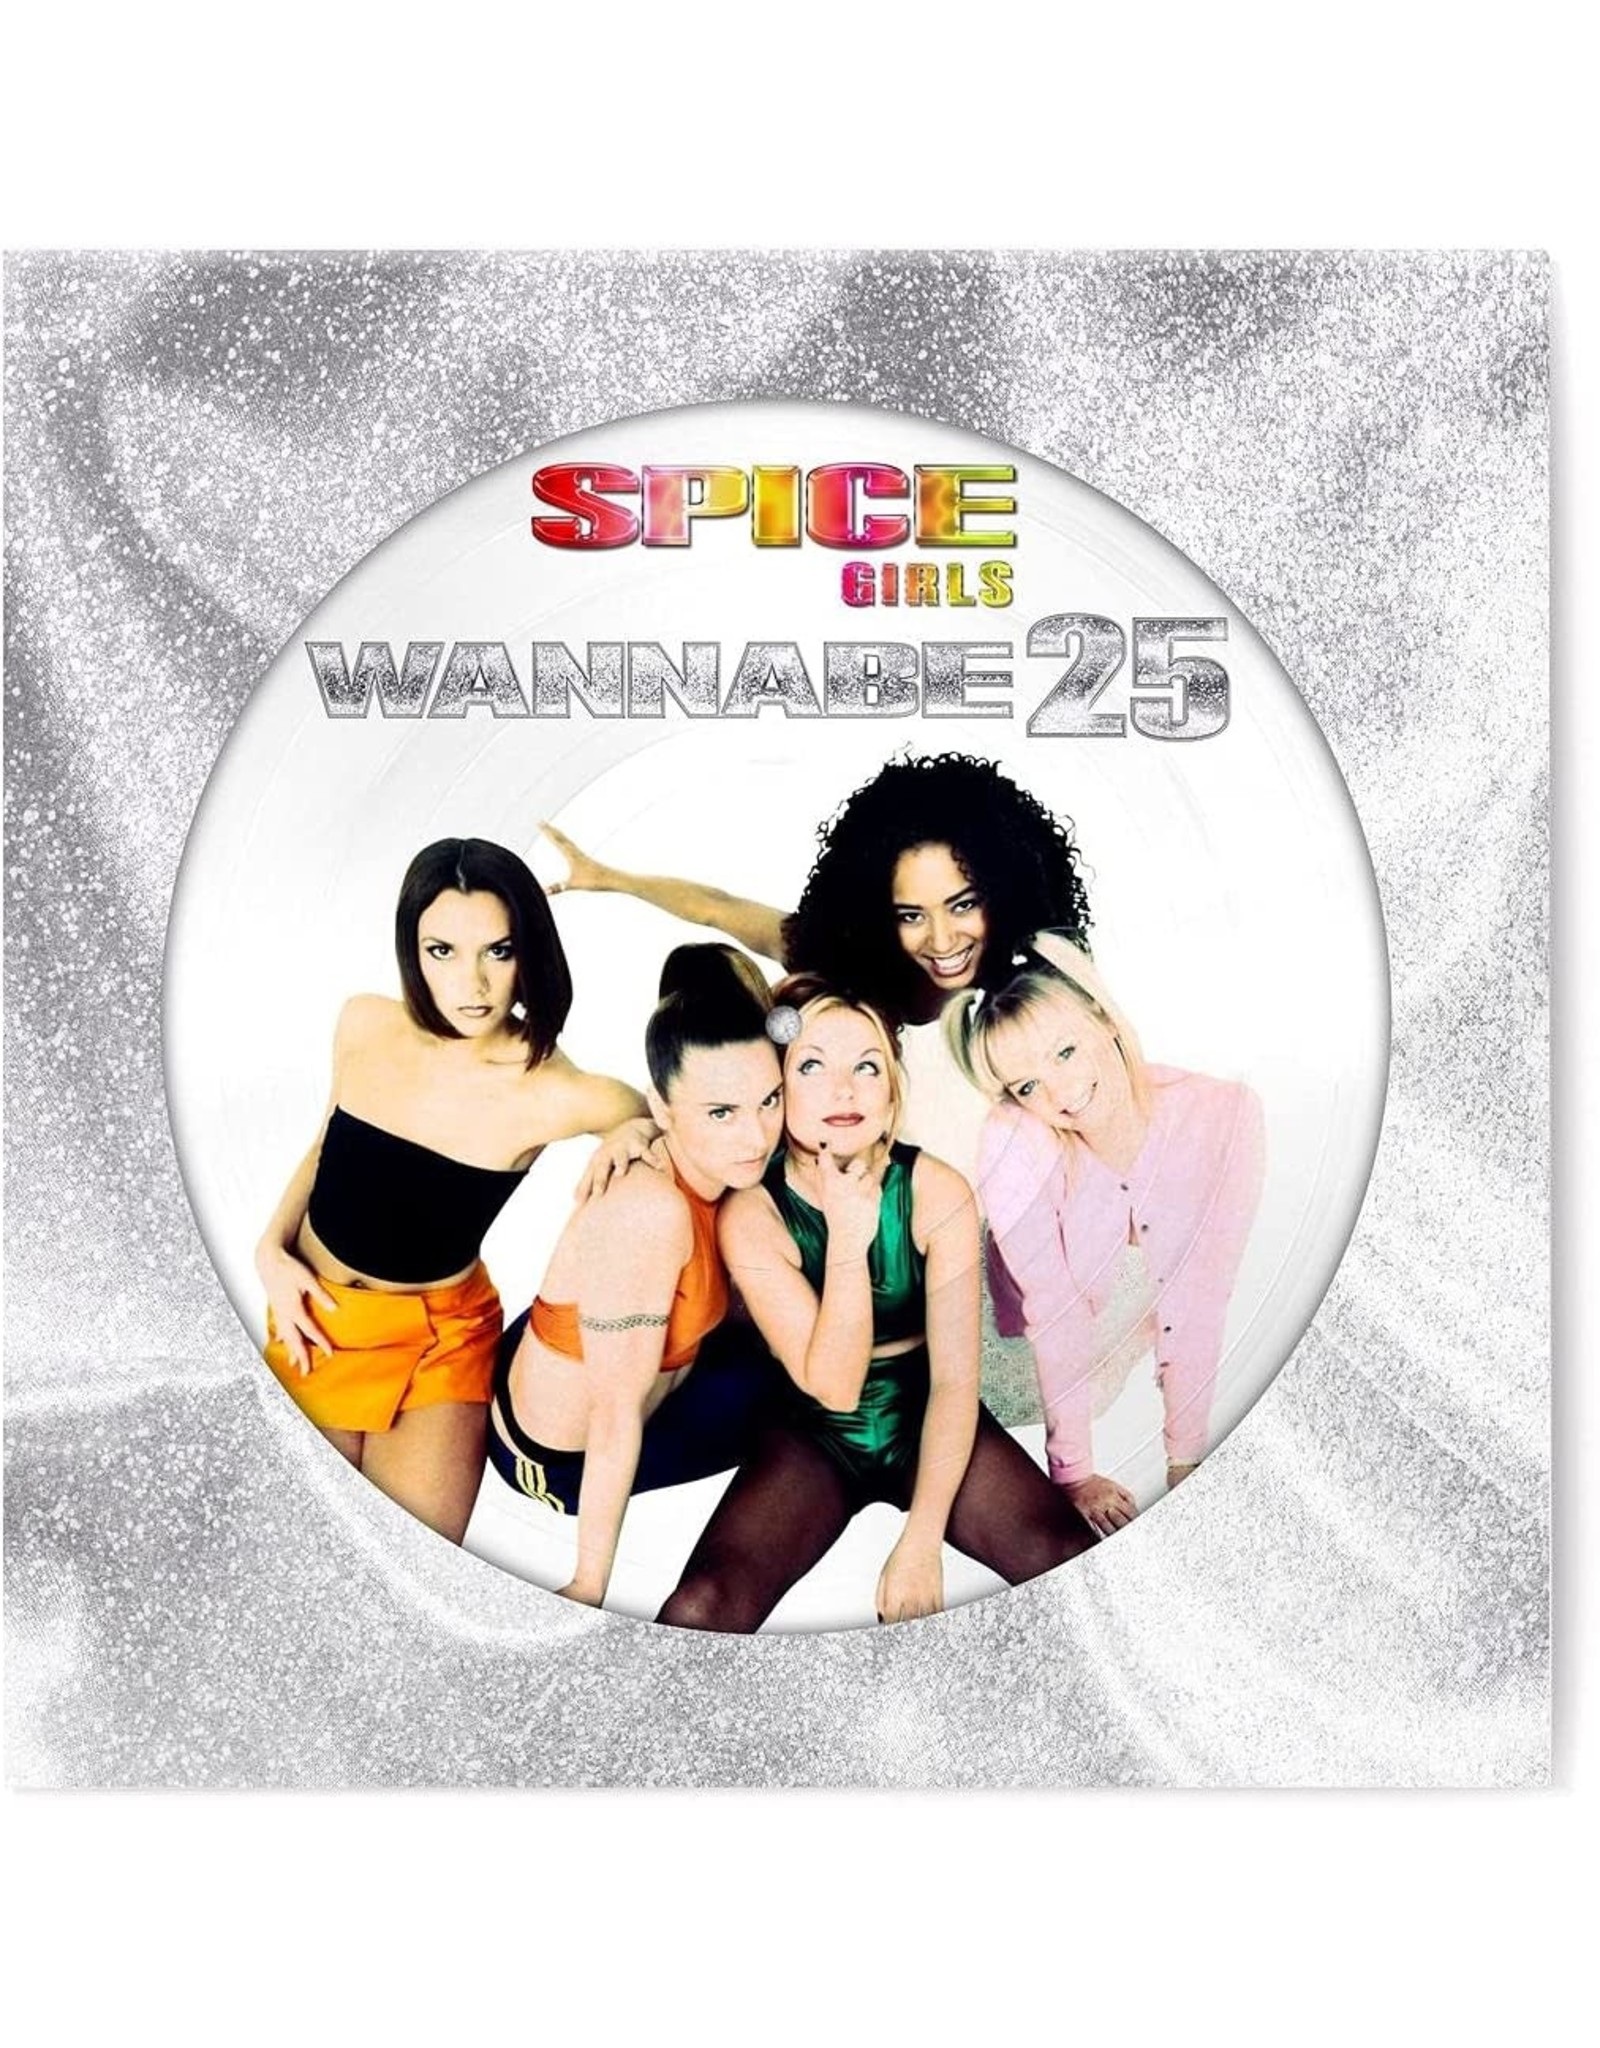 Spice Girls Wannabe 25th Anniversary Picture Disc Vinyl Pop Music